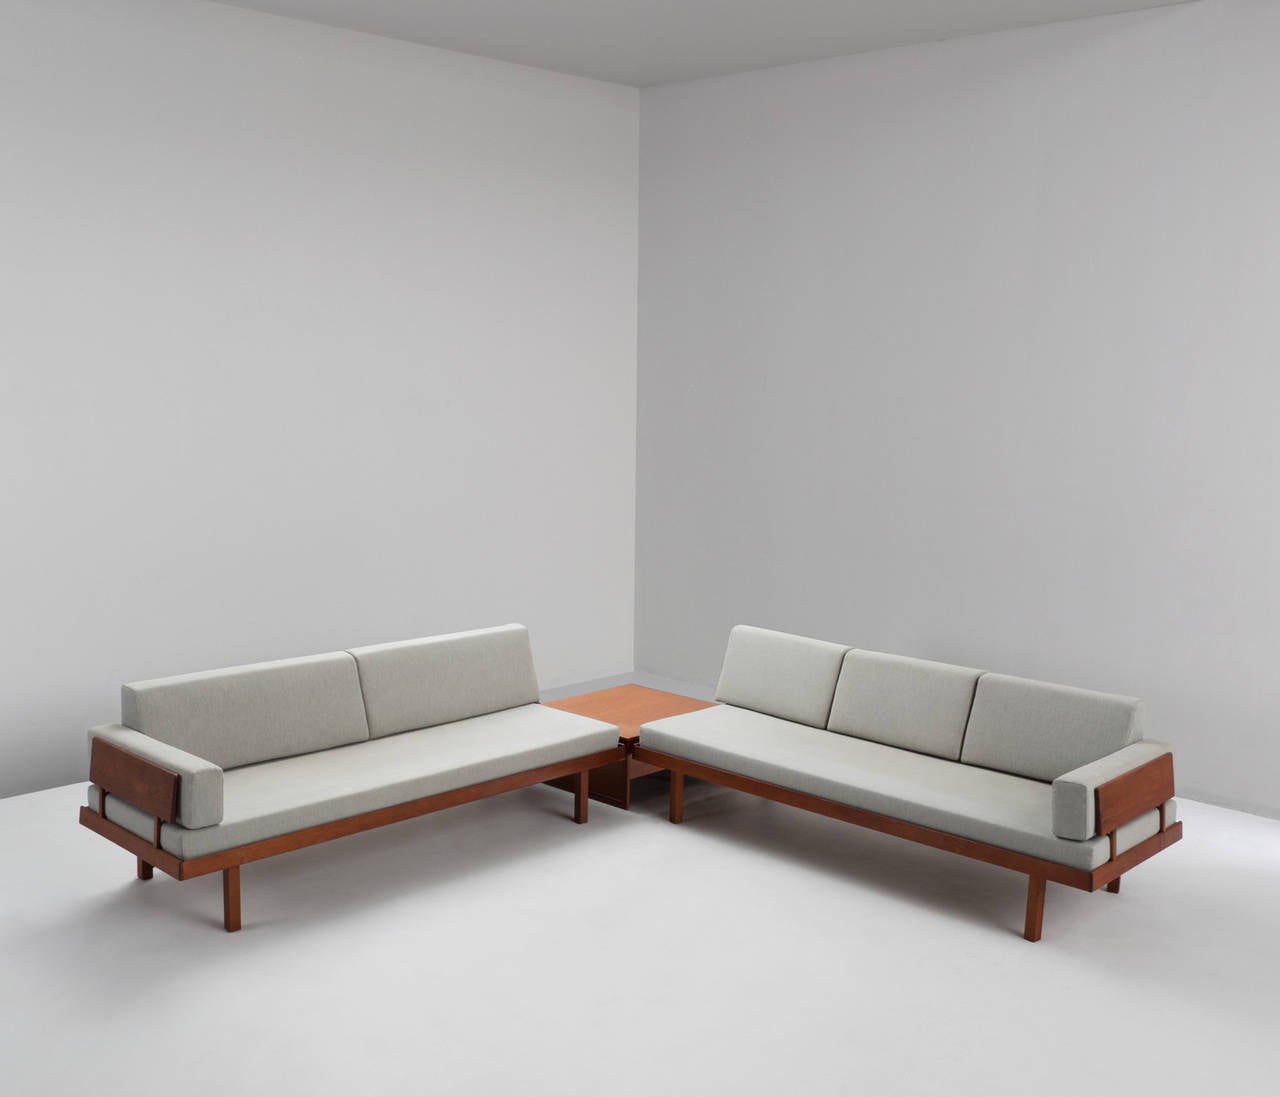 Scandinavian Modern Danish Living Room Set in Teak and Fabric Upholstery